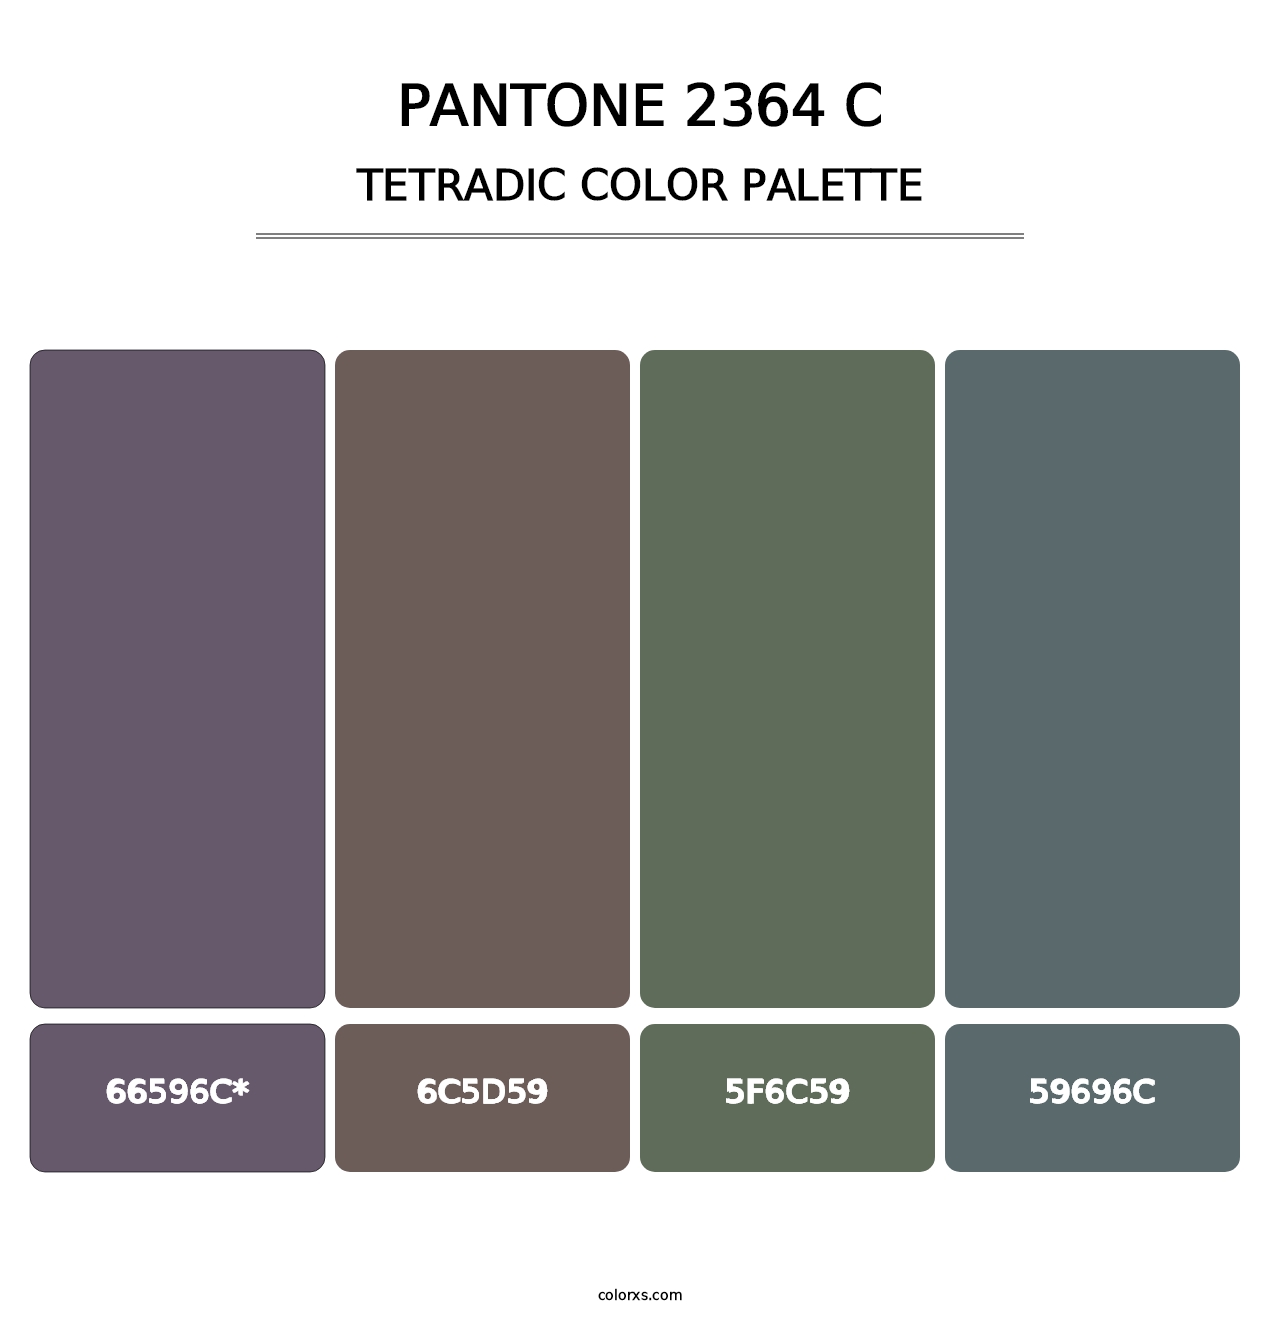 PANTONE 2364 C - Tetradic Color Palette